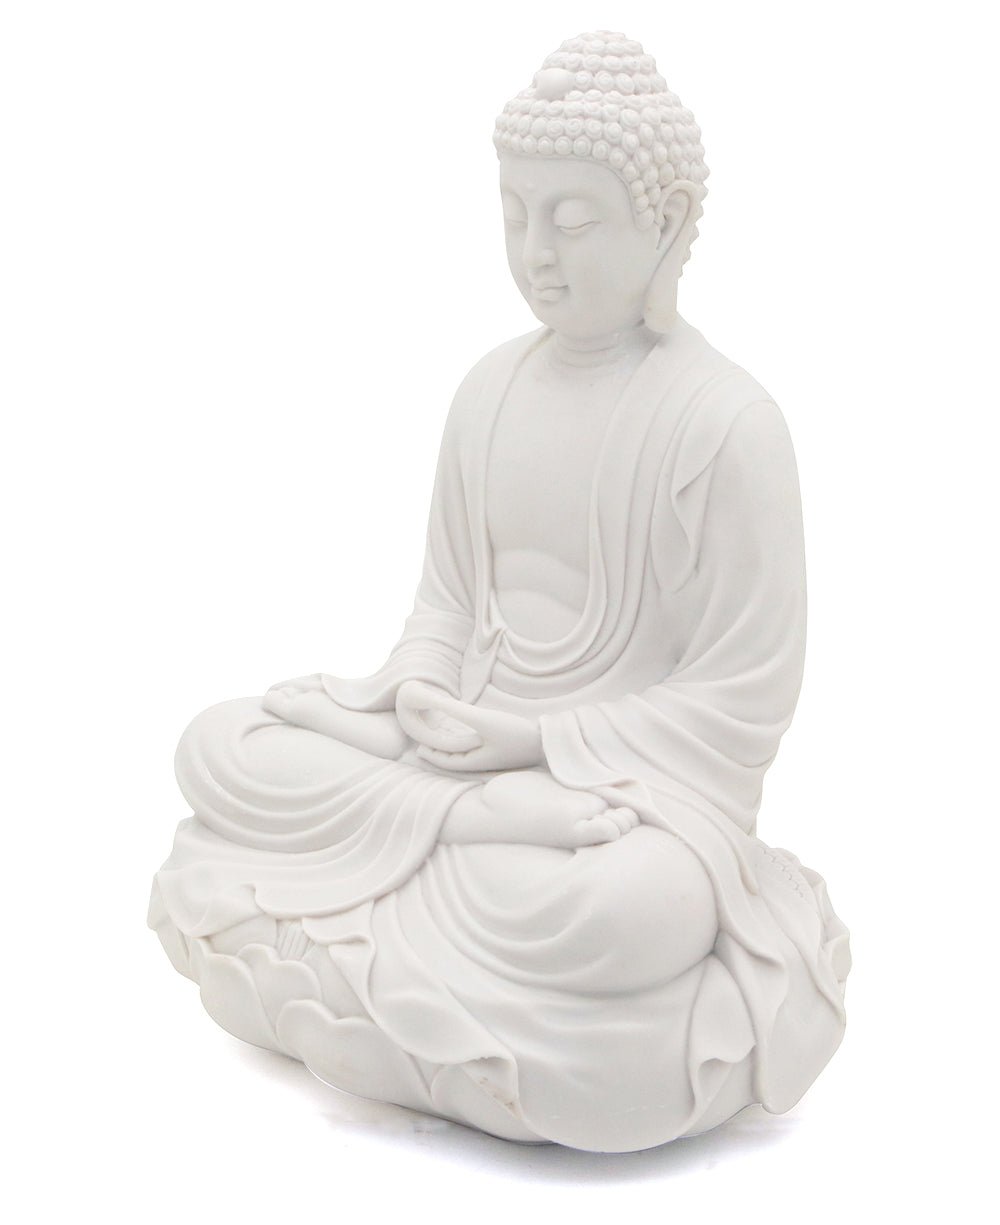 Serene White Garden Meditating Buddha statue - Sculptures & Statues